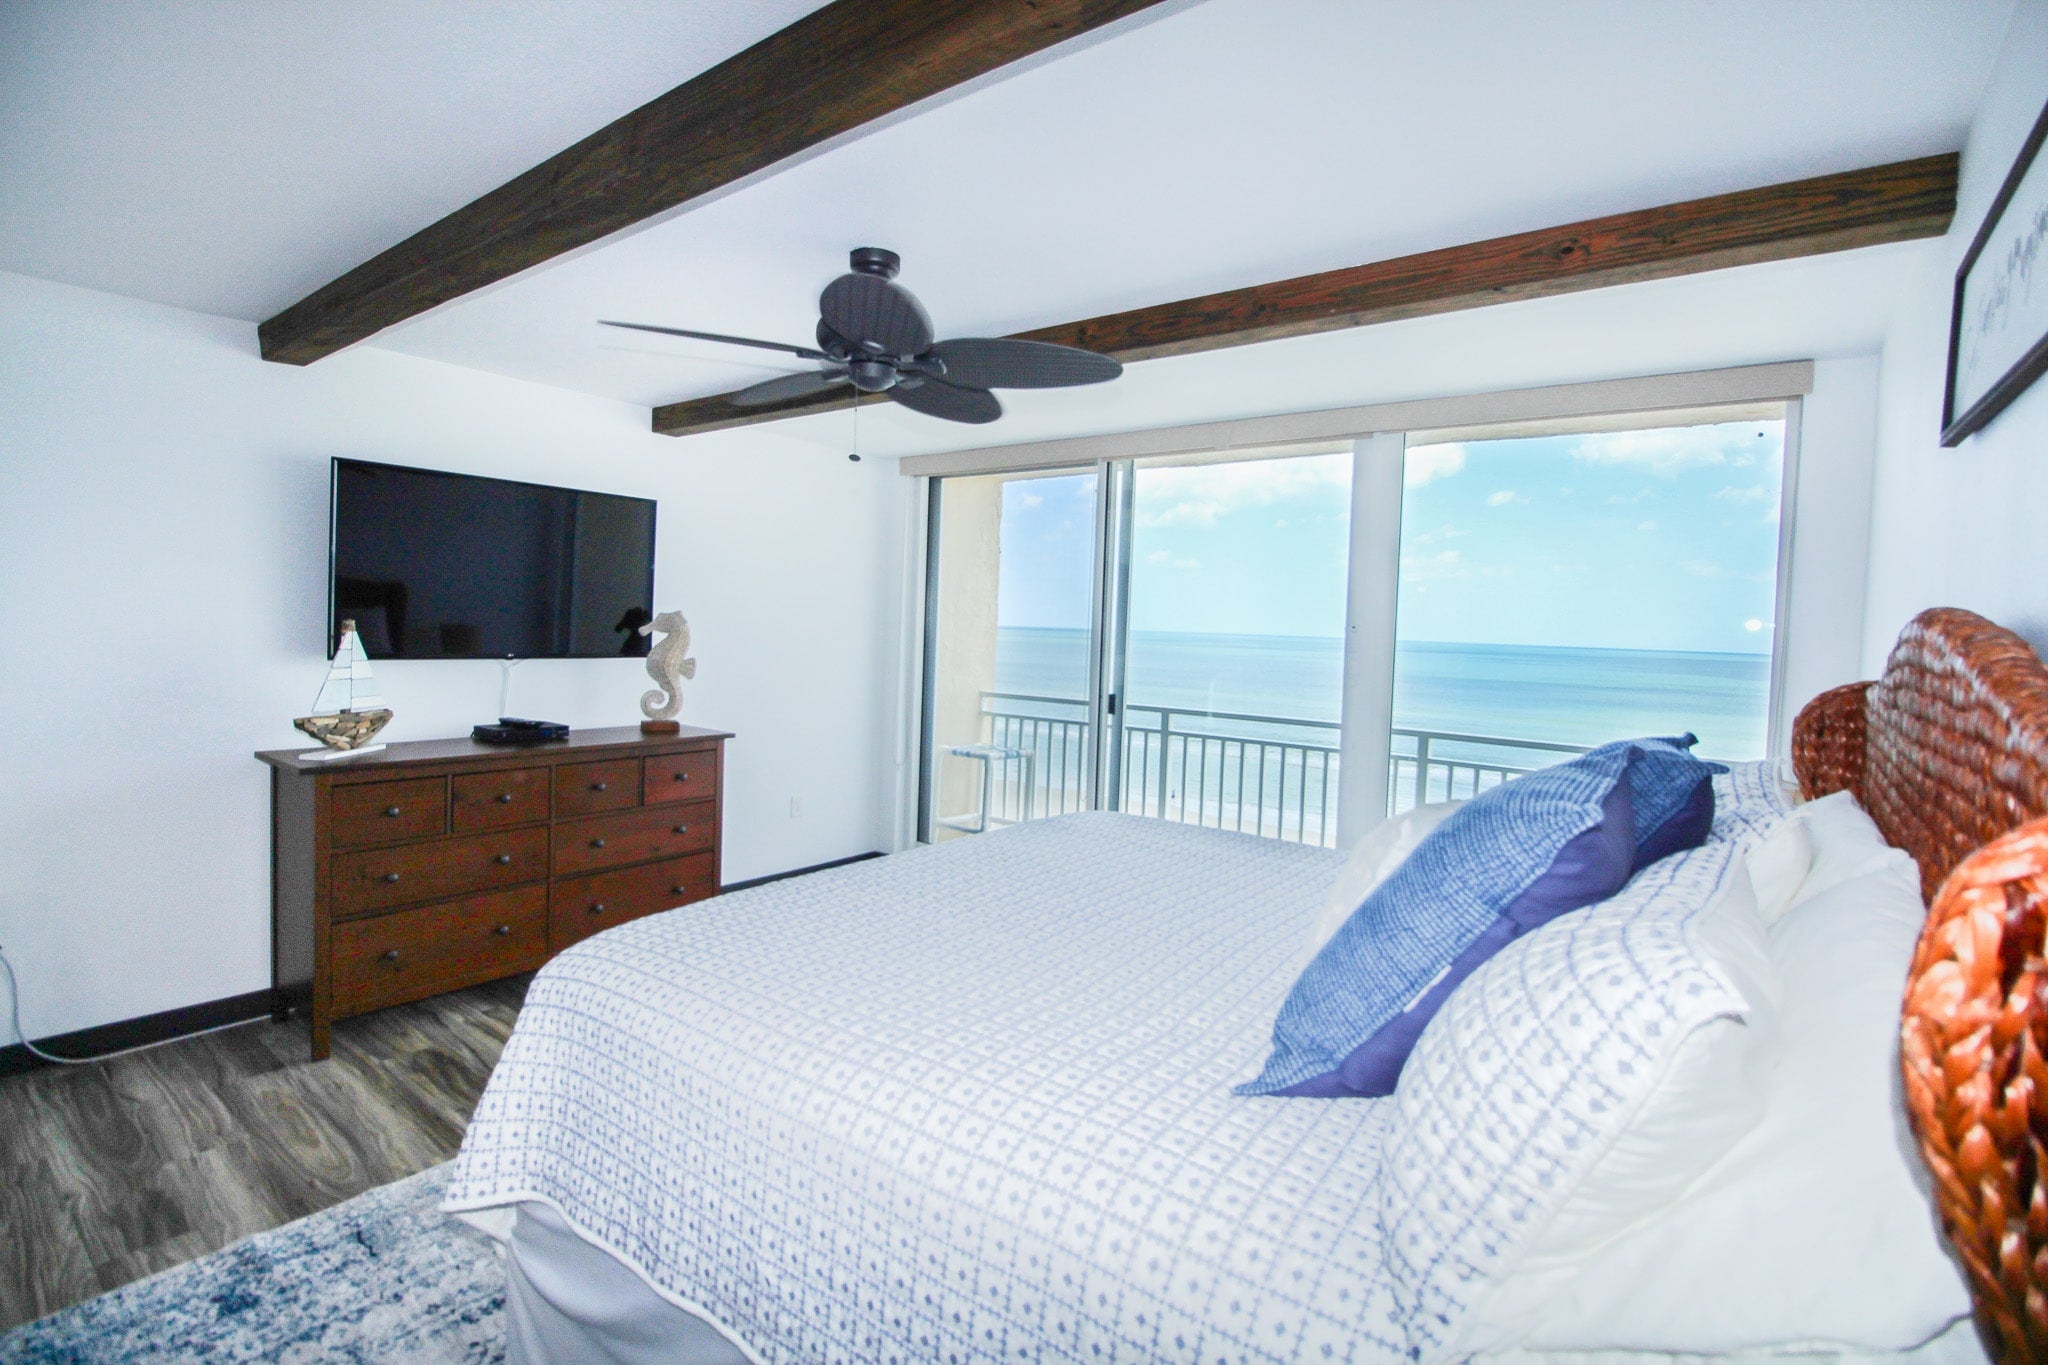 Enjoy ocean views while resting in bed